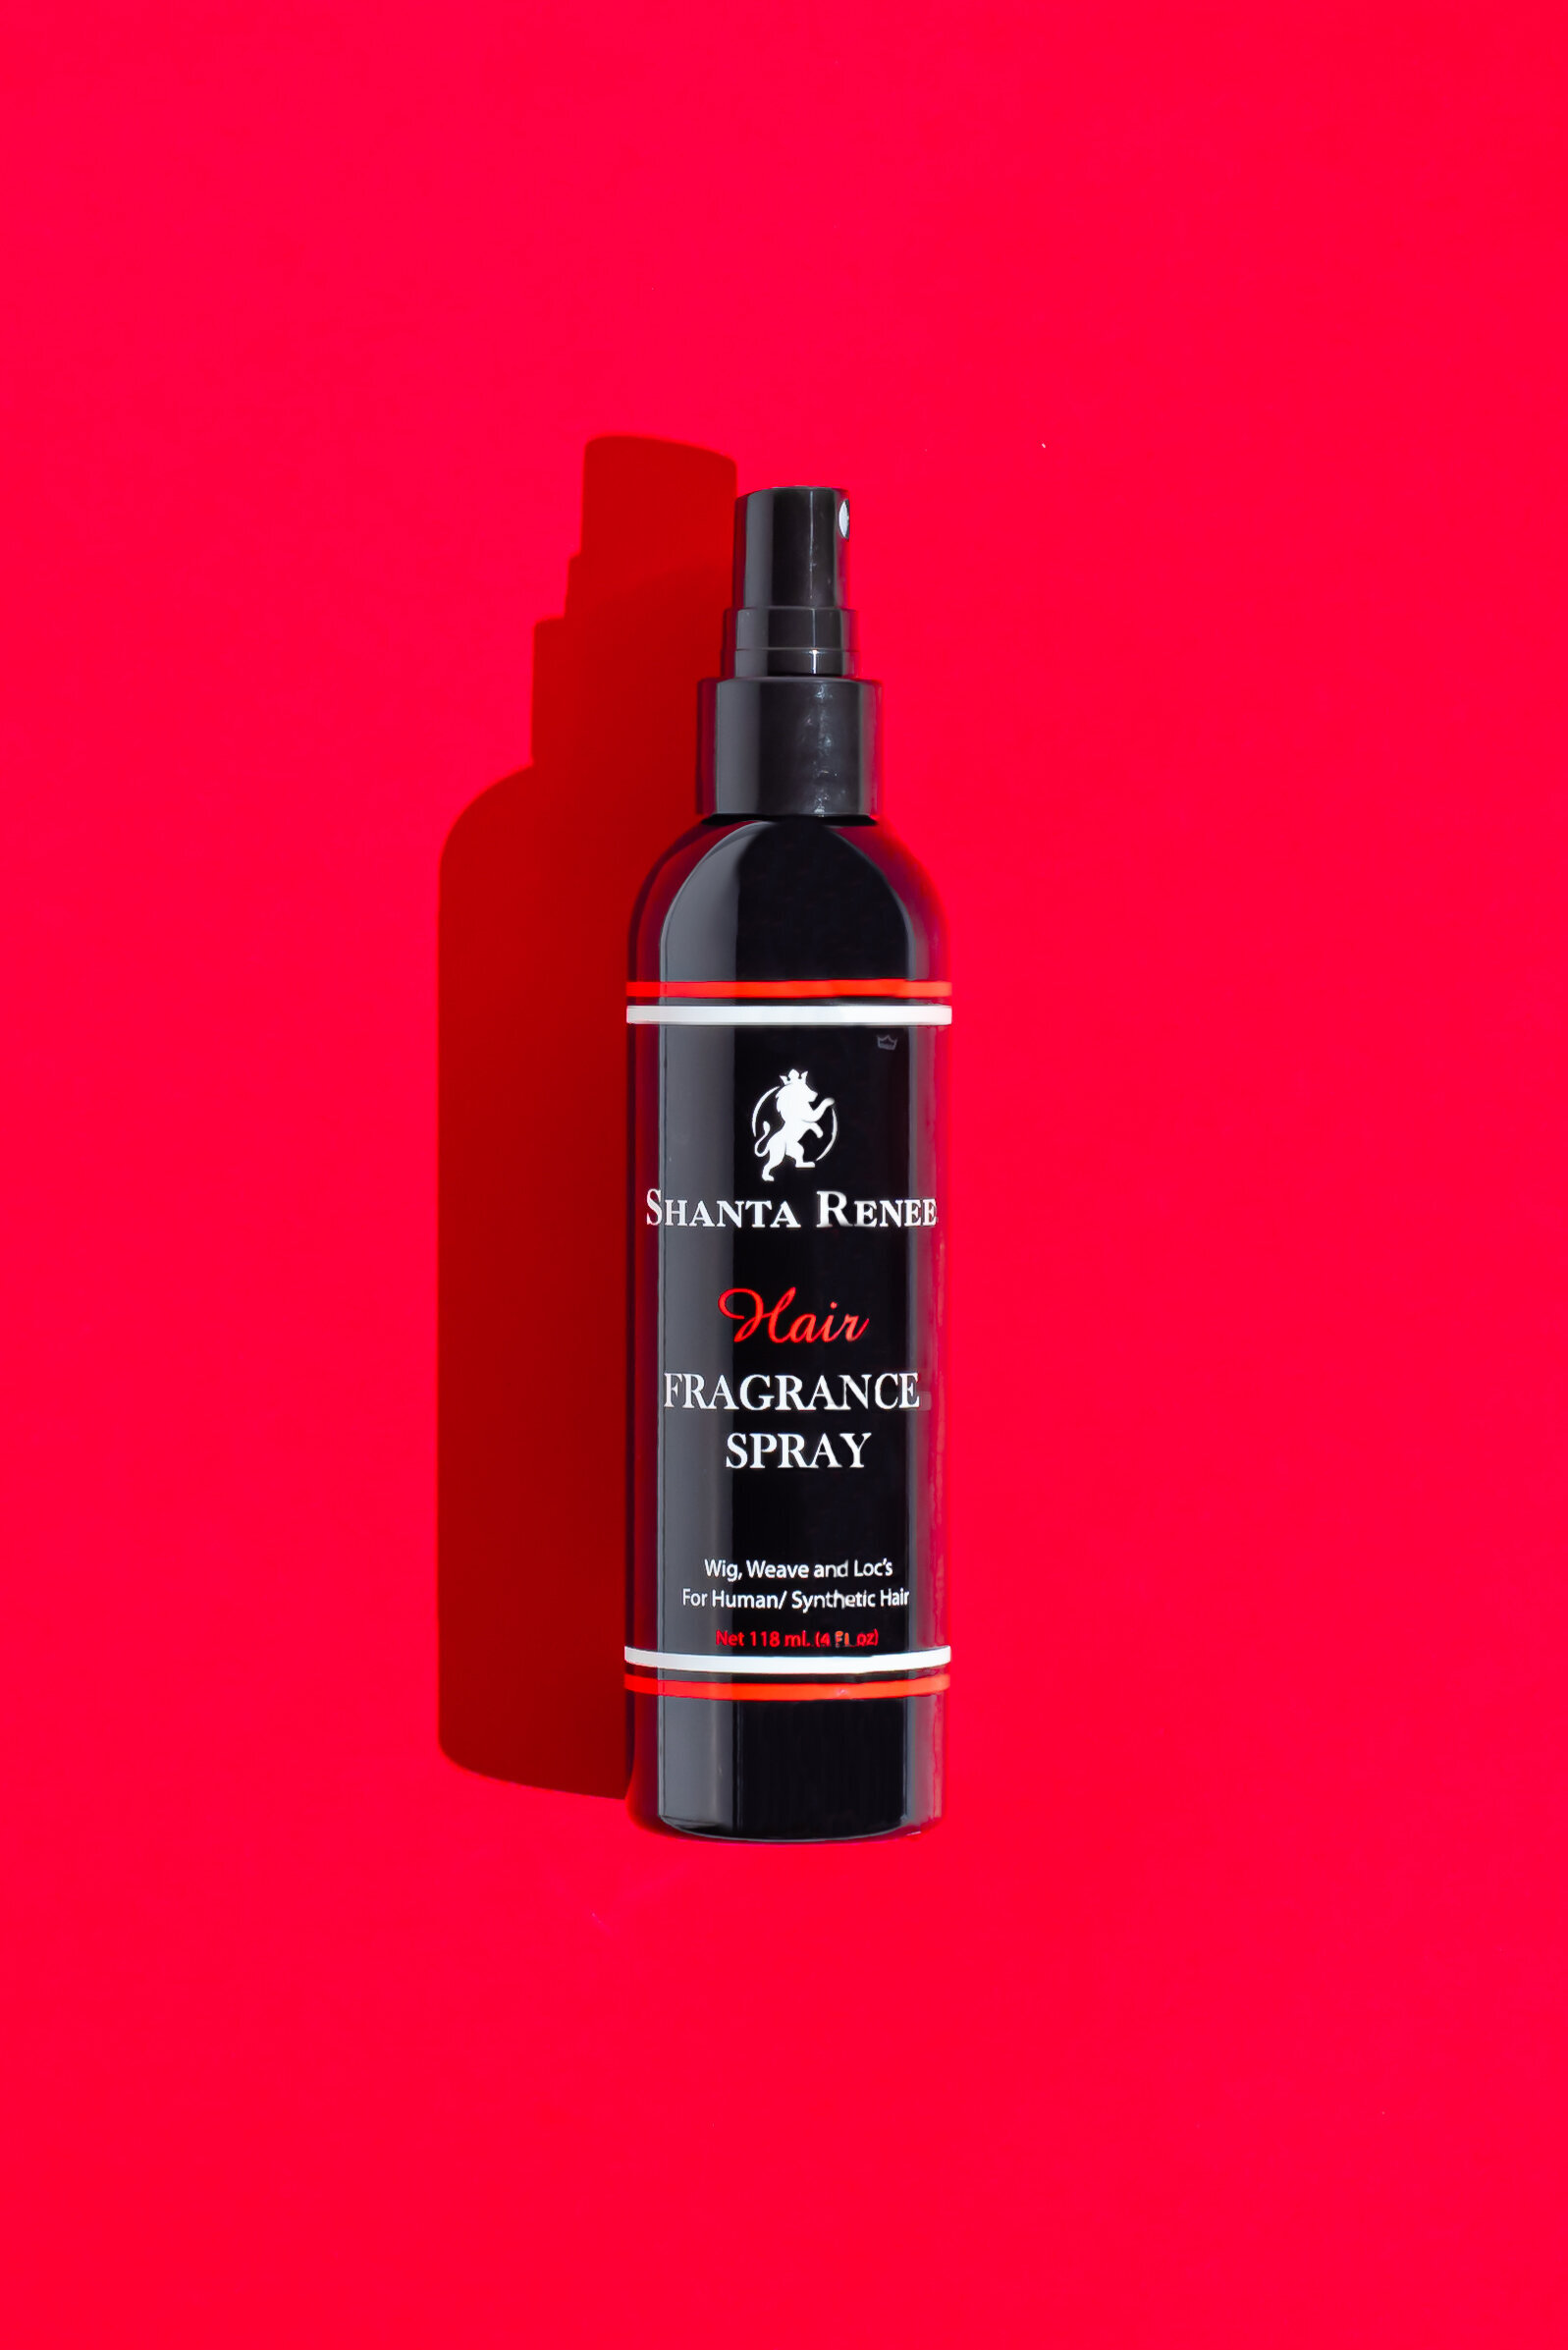 Bottle of hair fragrance on red background